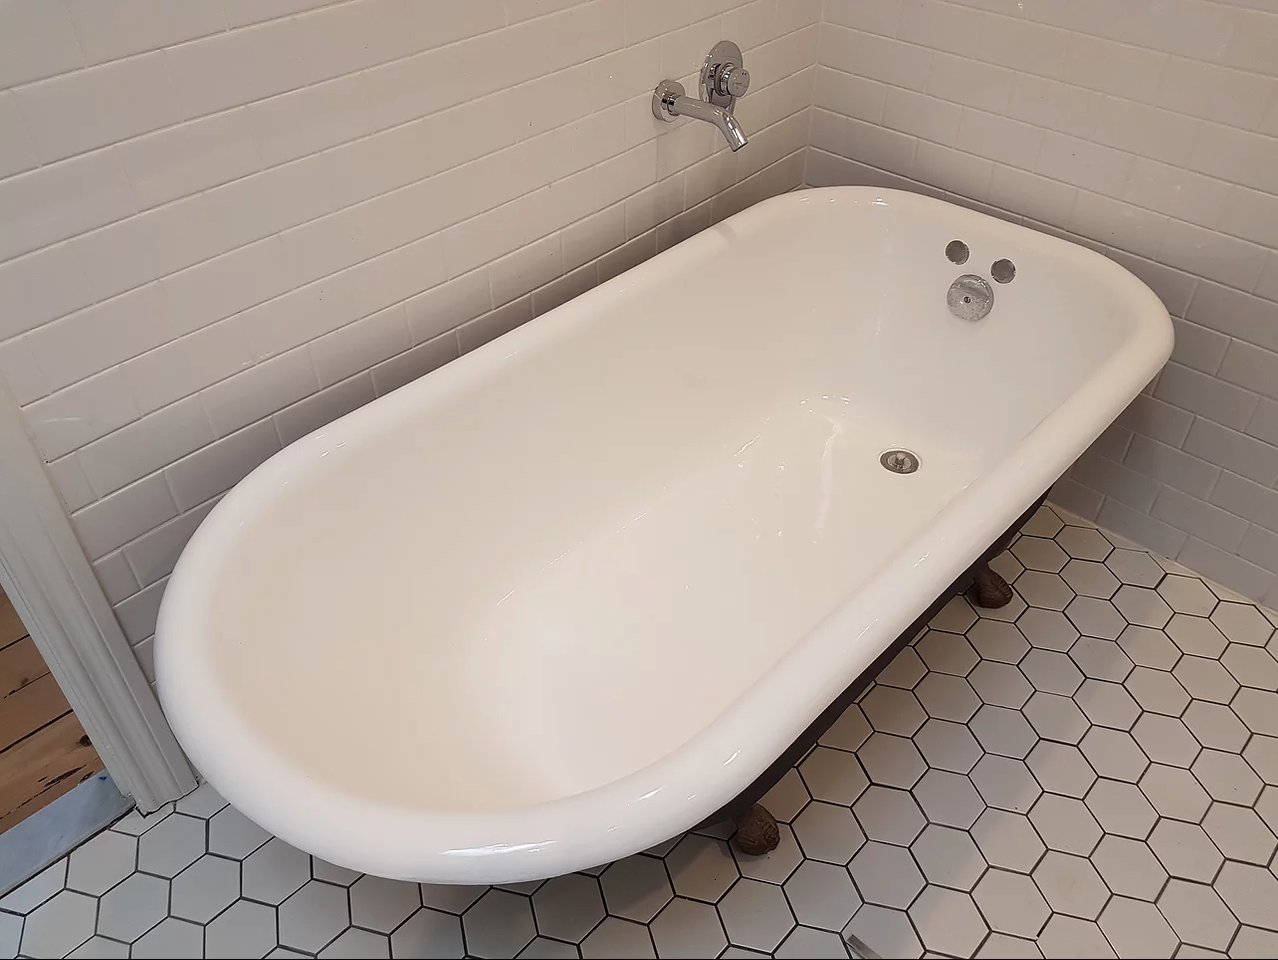 Refinishing & Renew Your Bath Tub